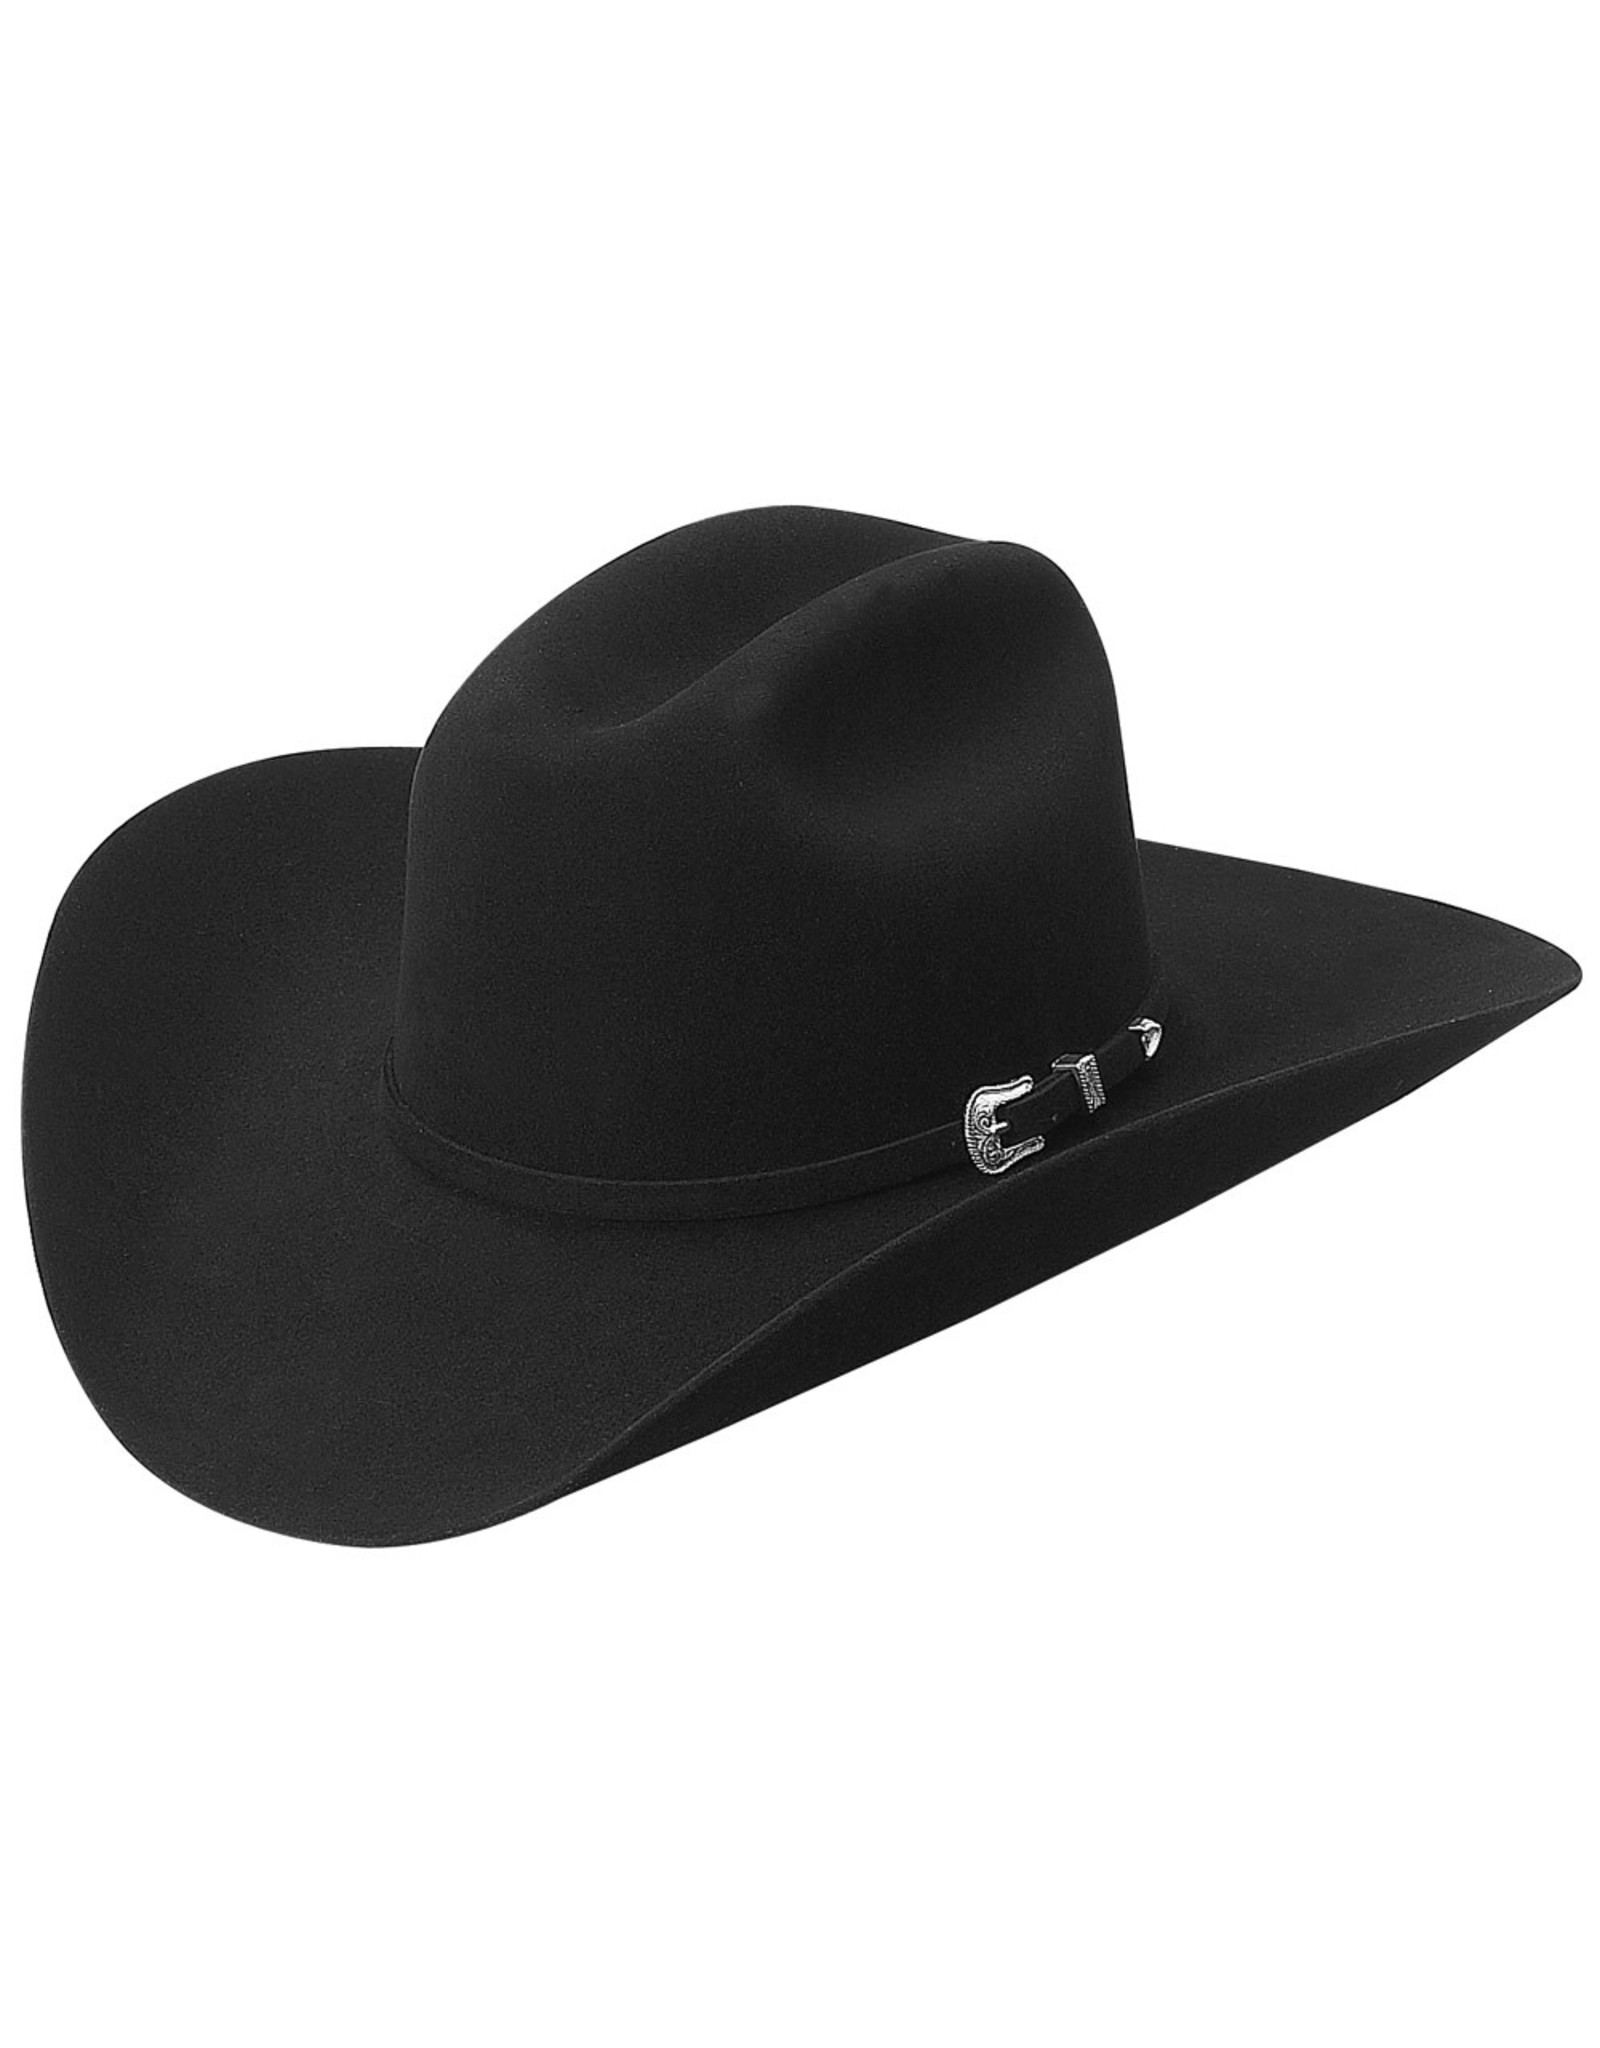 American Hat Co. Black Cattleman 10X Beaver Felt Hat Sz. 7